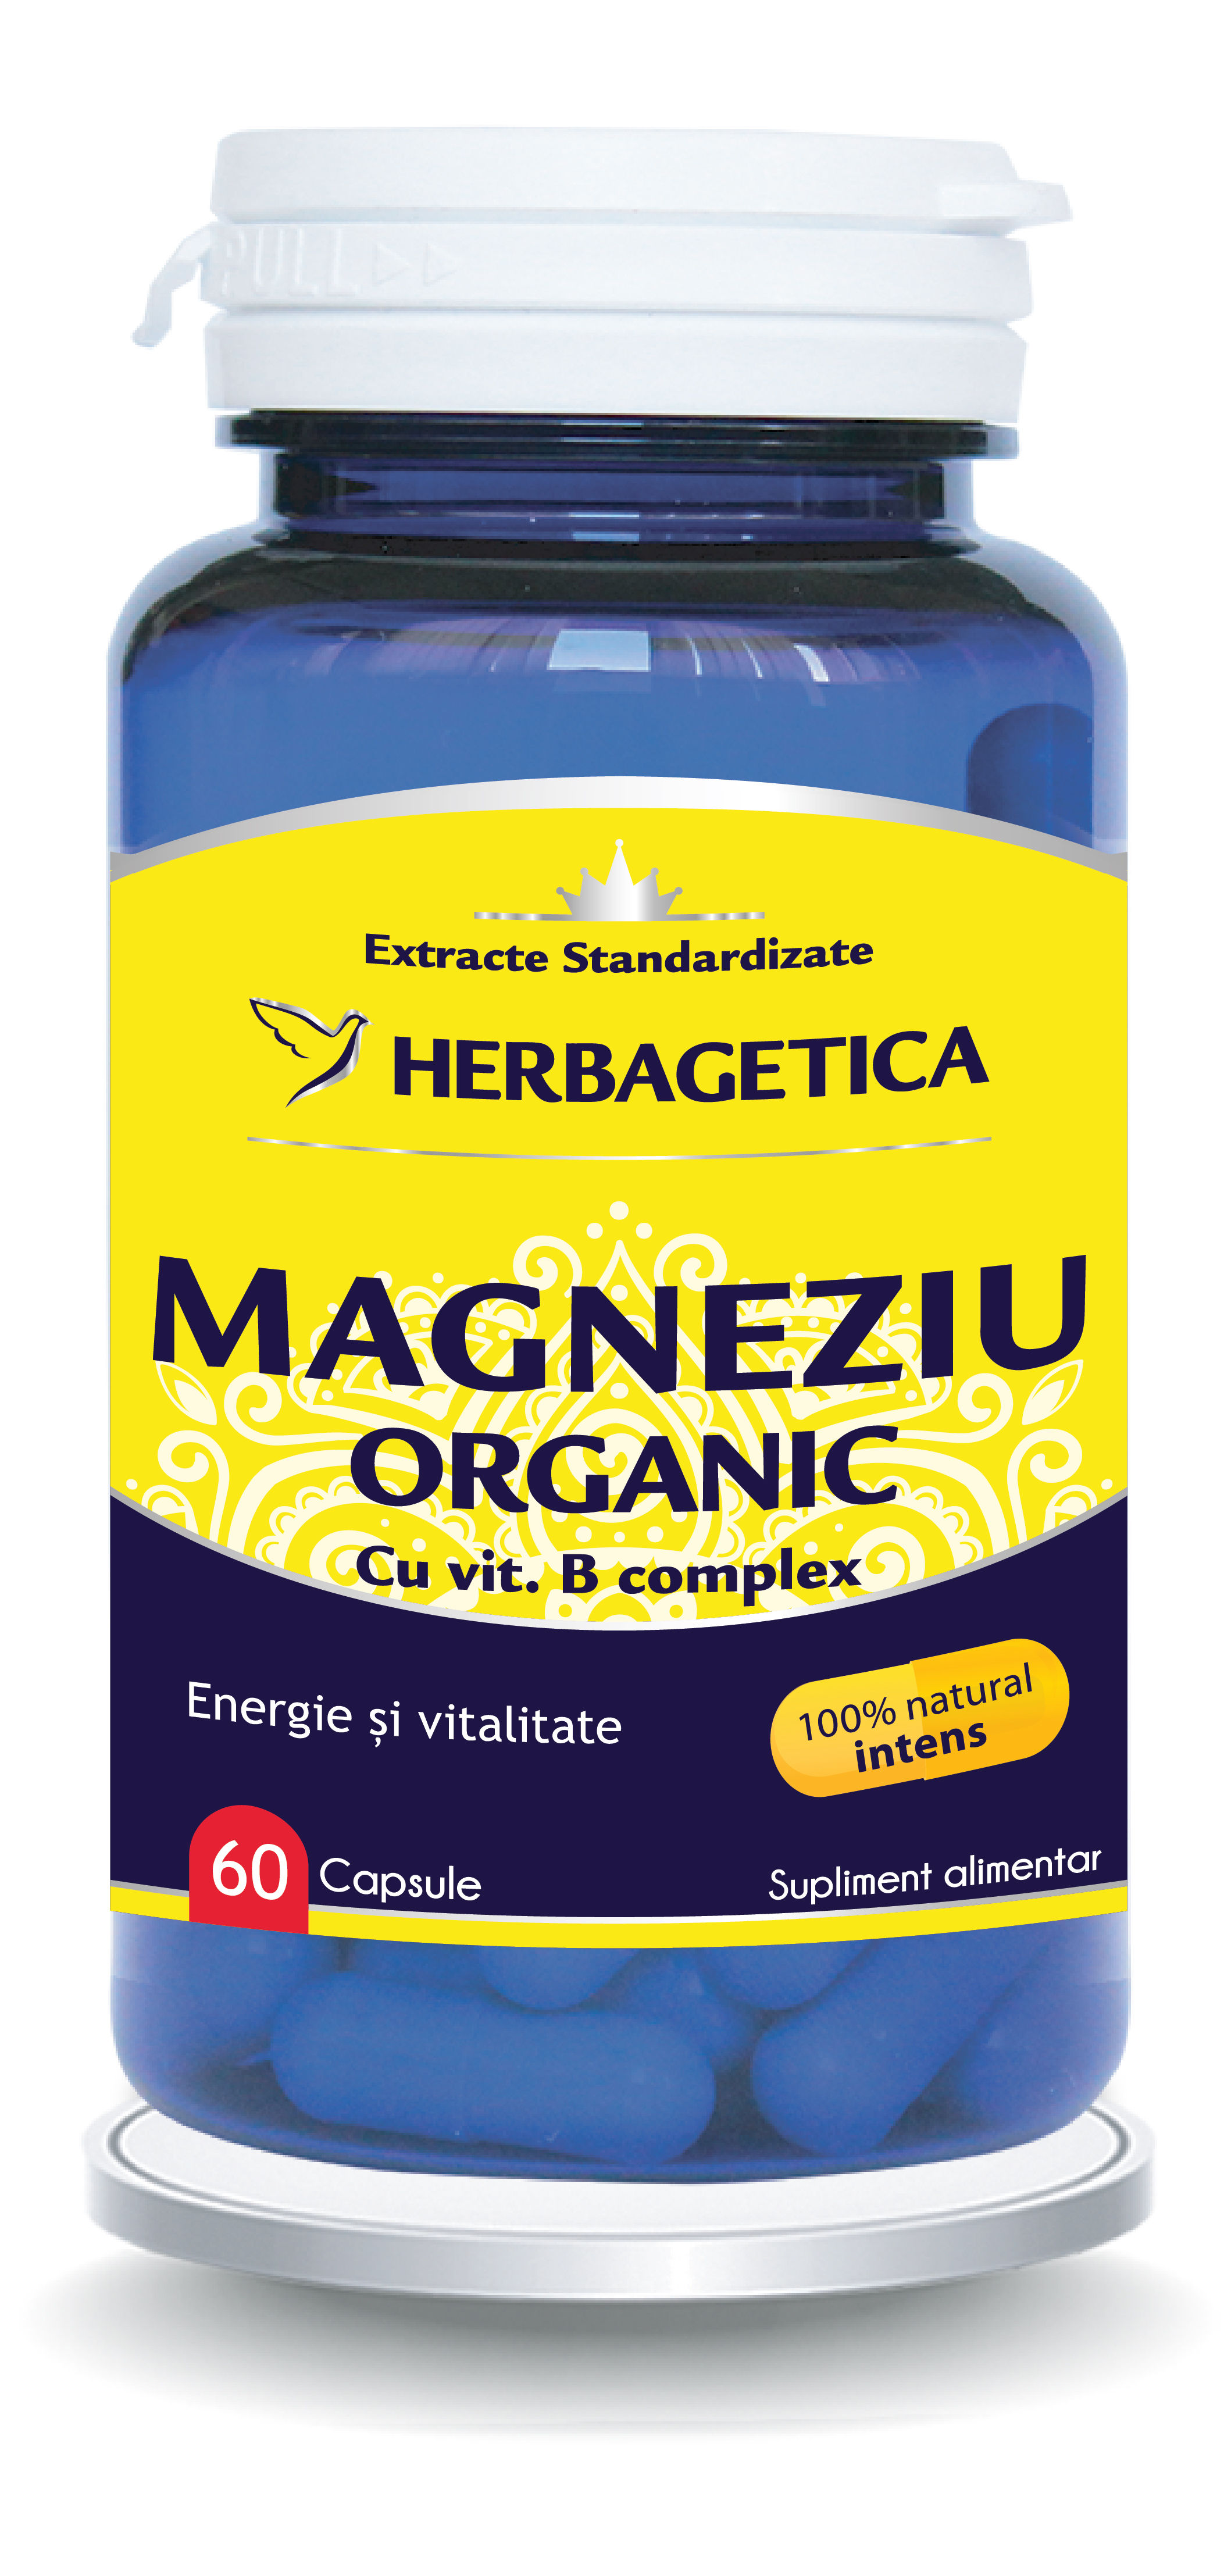 Magneziu organic